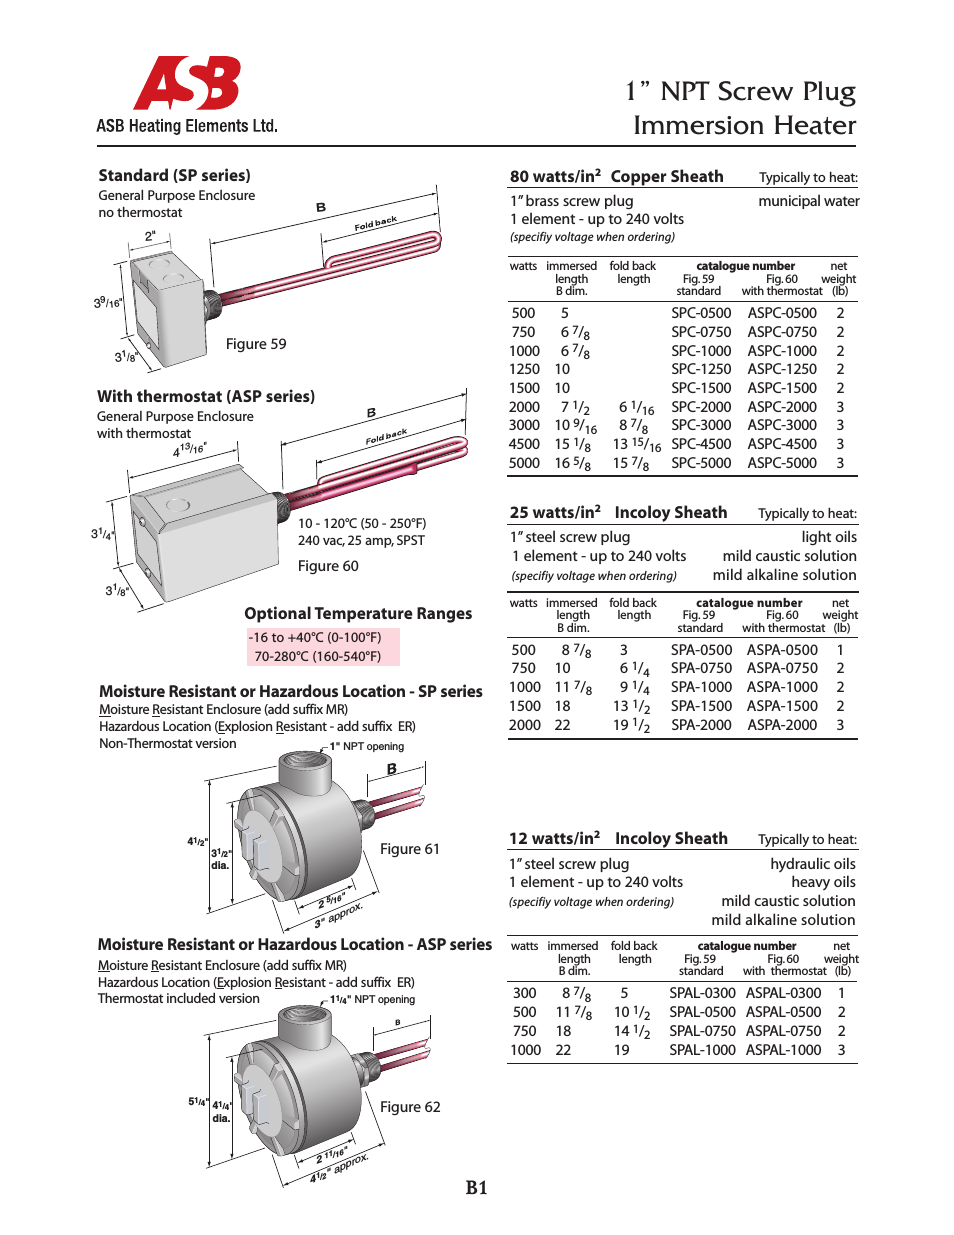 1” NPT Screw Plug Immersion Heater